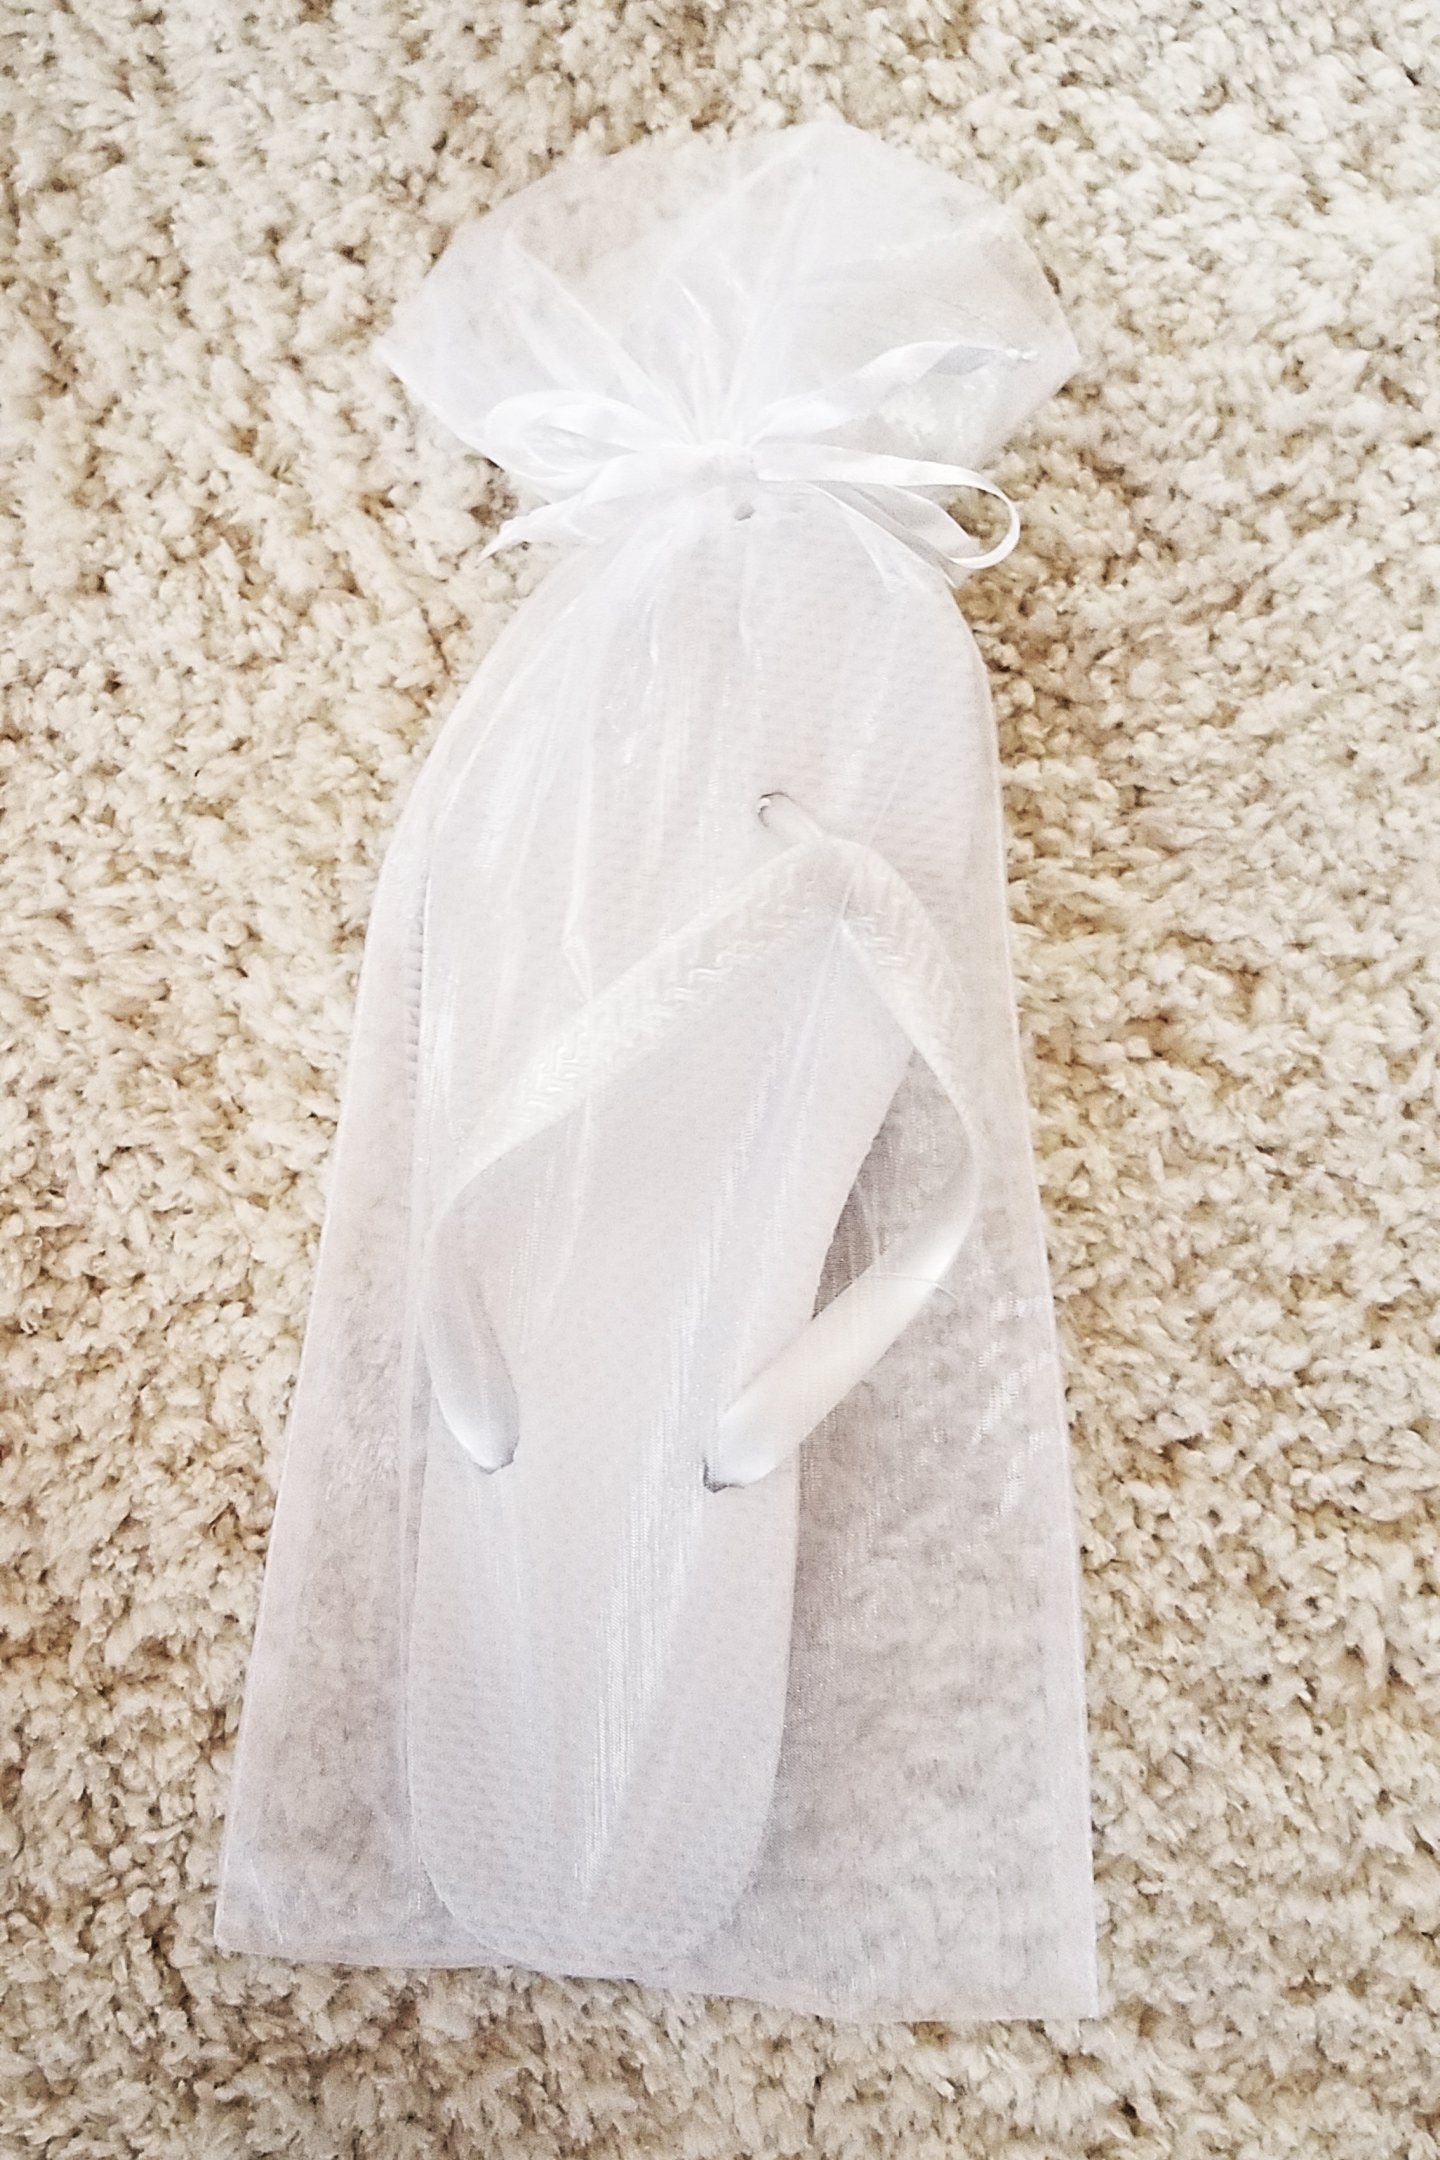 BEST DAY EVER WEDDING FLIP FLOPS - IVORY WHITE – AyaZay Wedding Shoppe